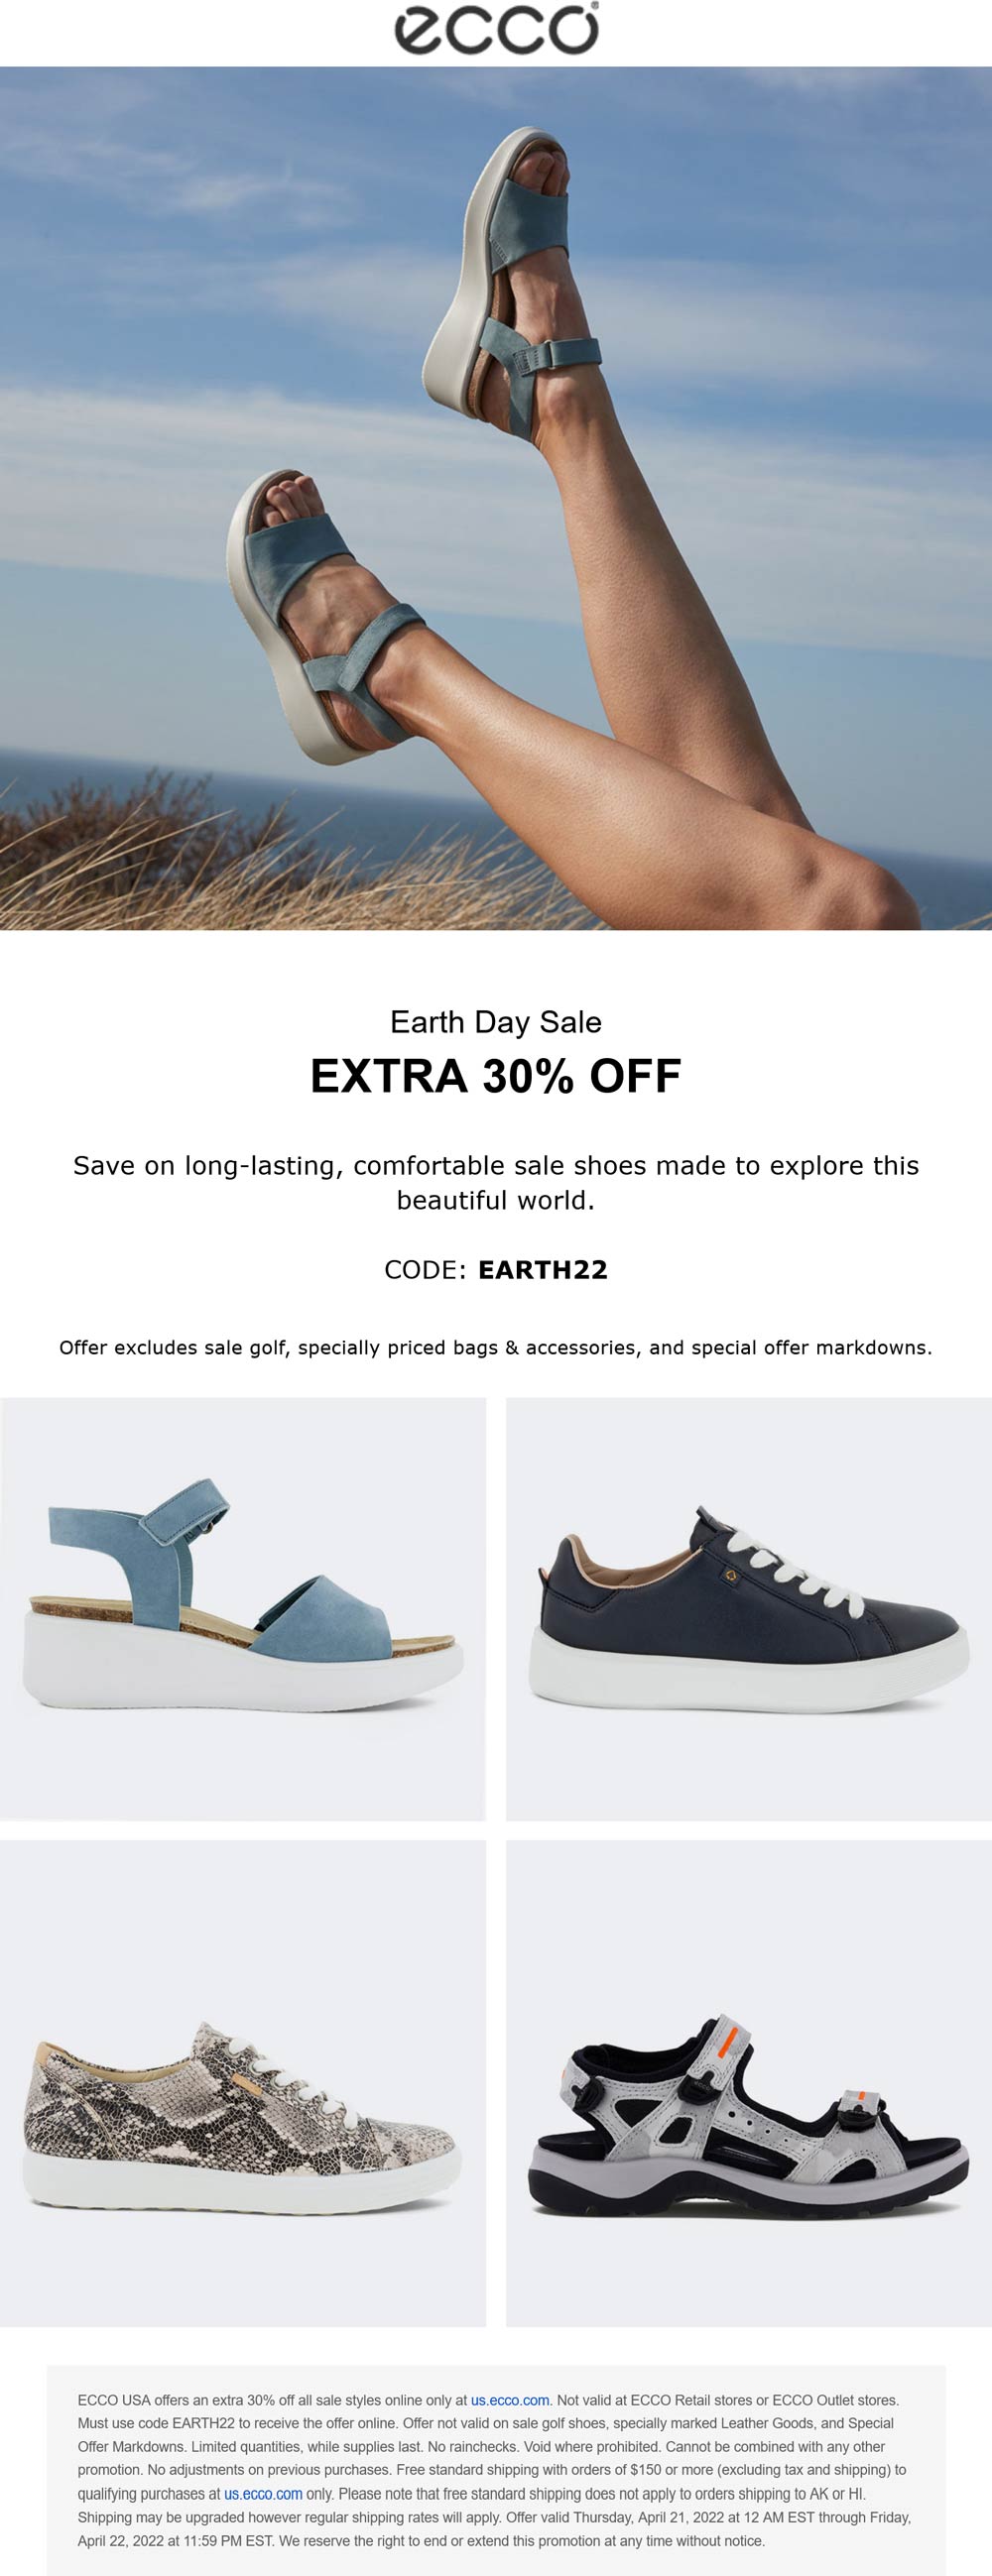 ECCO stores Coupon  Extra 30% off sale styles online at ECCO via promo code EARTH22 #ecco 